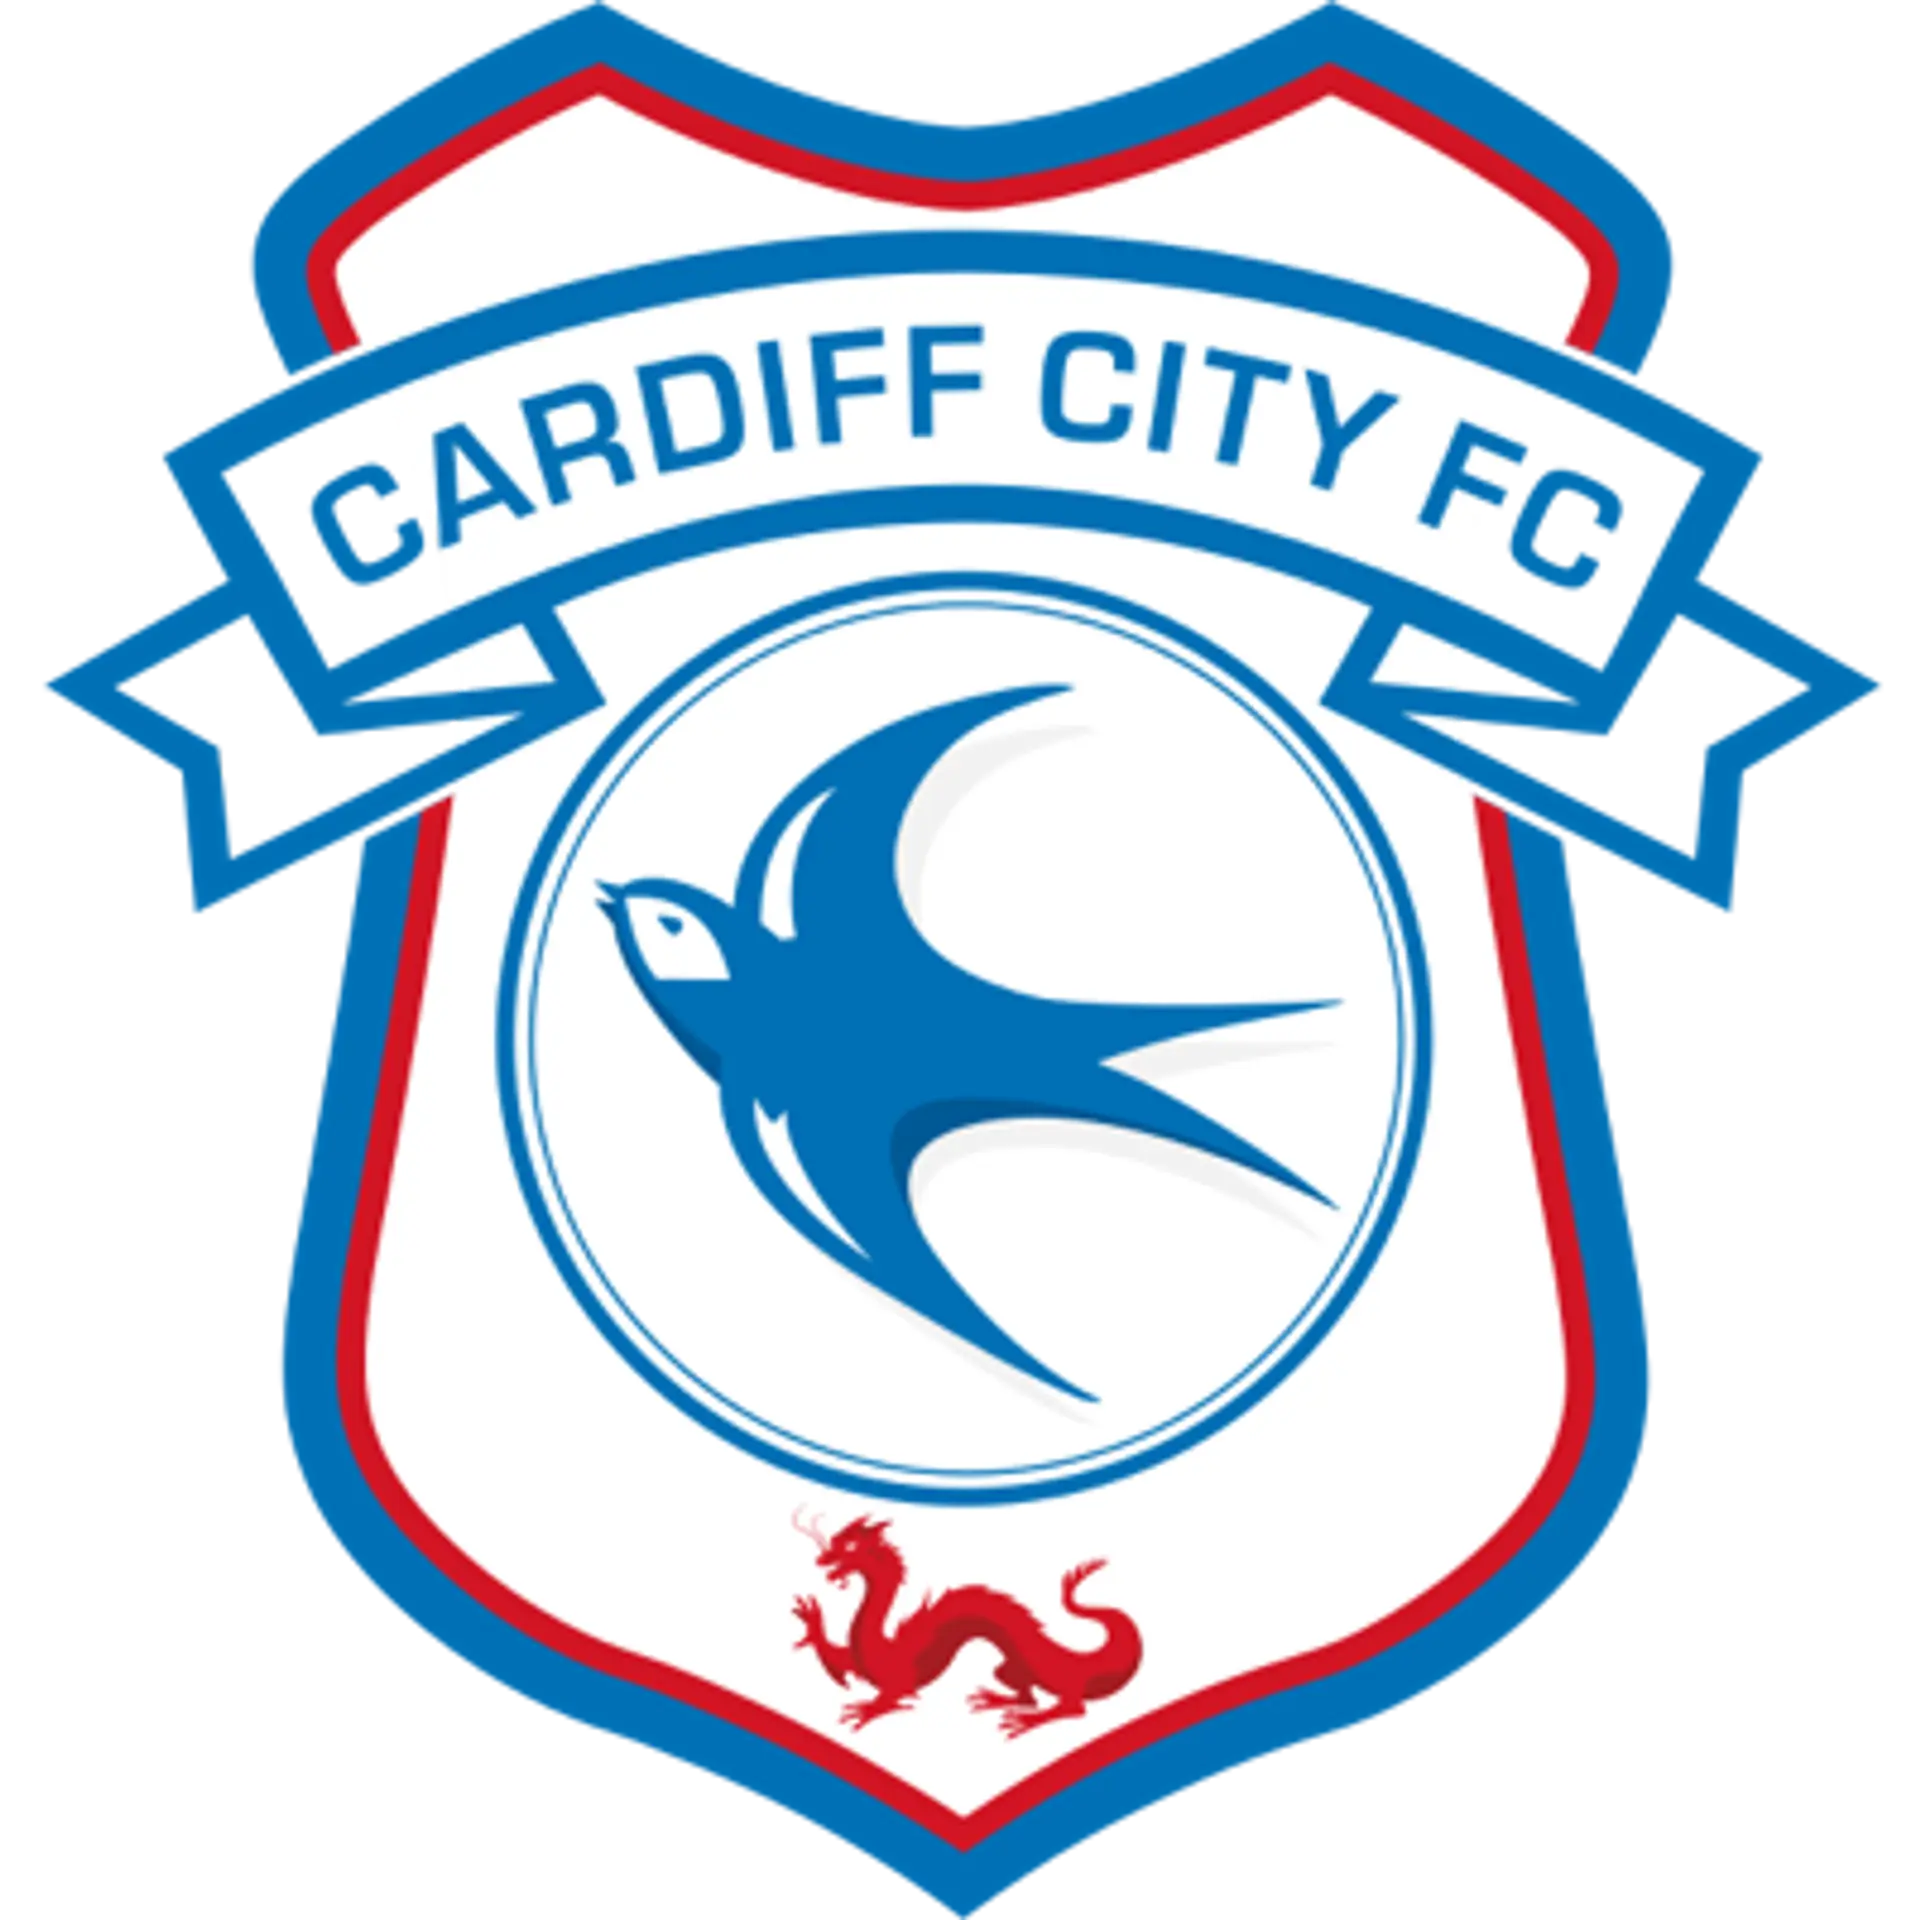 Cardiff City Notizie 